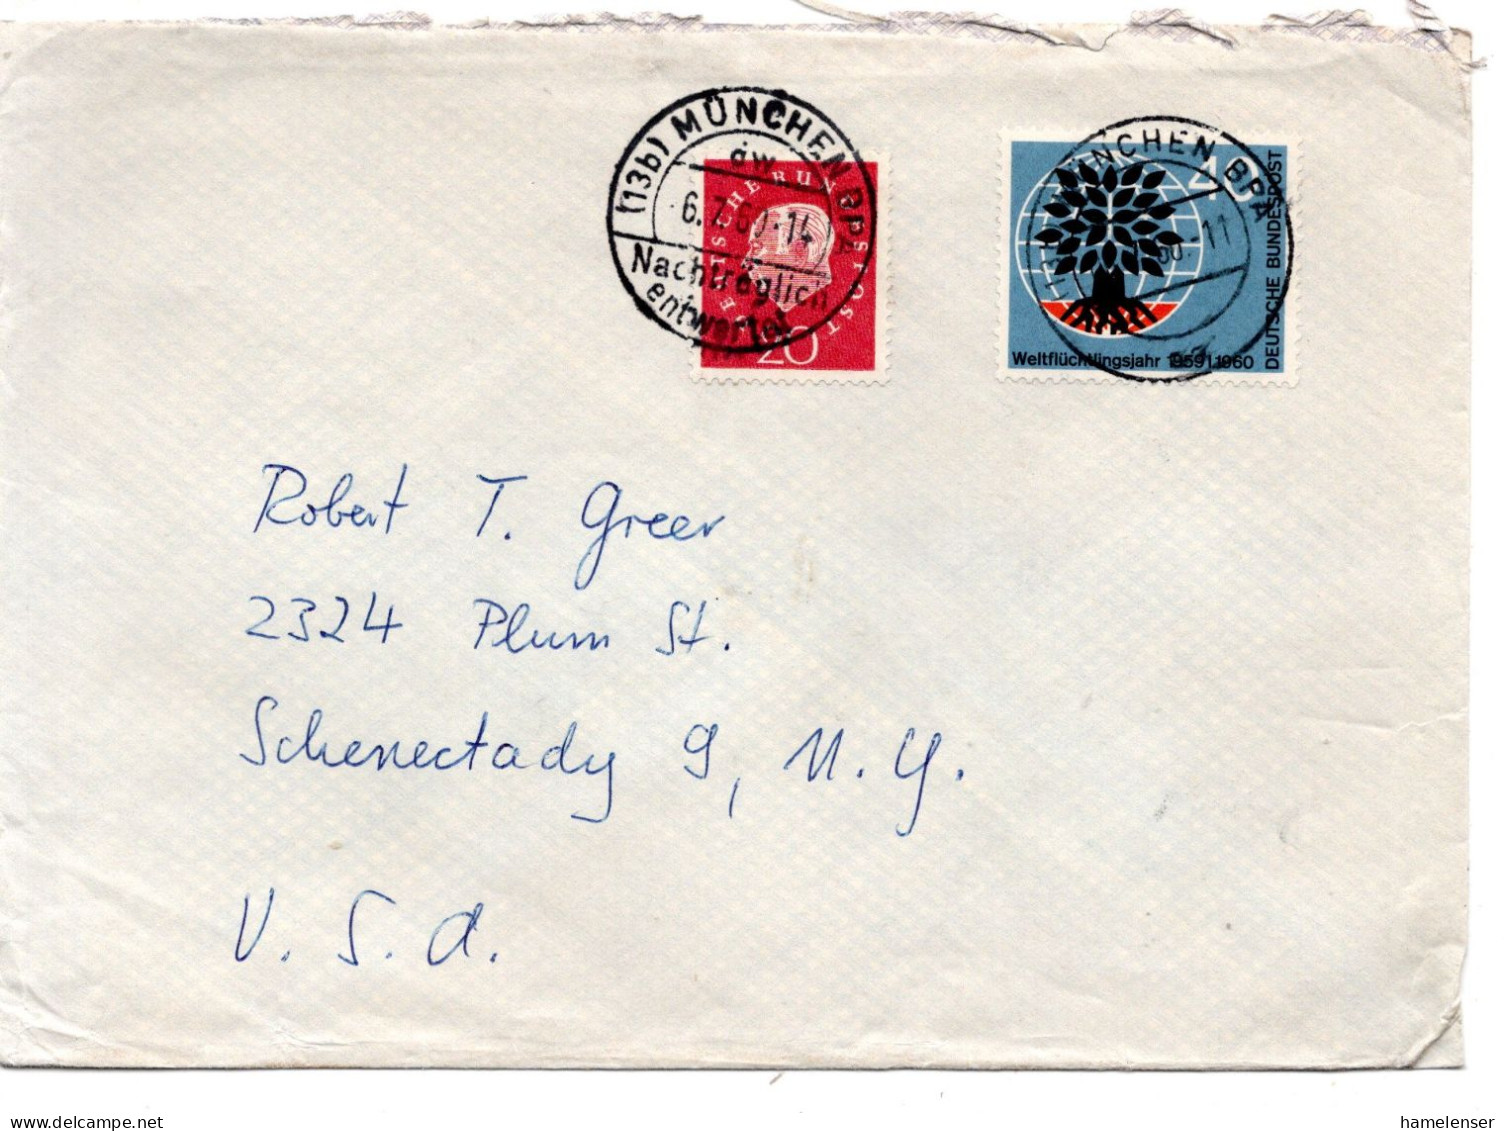 69477 - Bund - 1960 - 40Pfg Fluechtlingshilfe MiF A Bf MUENCHEN -> MUENCHEN - NACHTRAEGLICH ... -> Schenectady, NY (USA) - Lettres & Documents